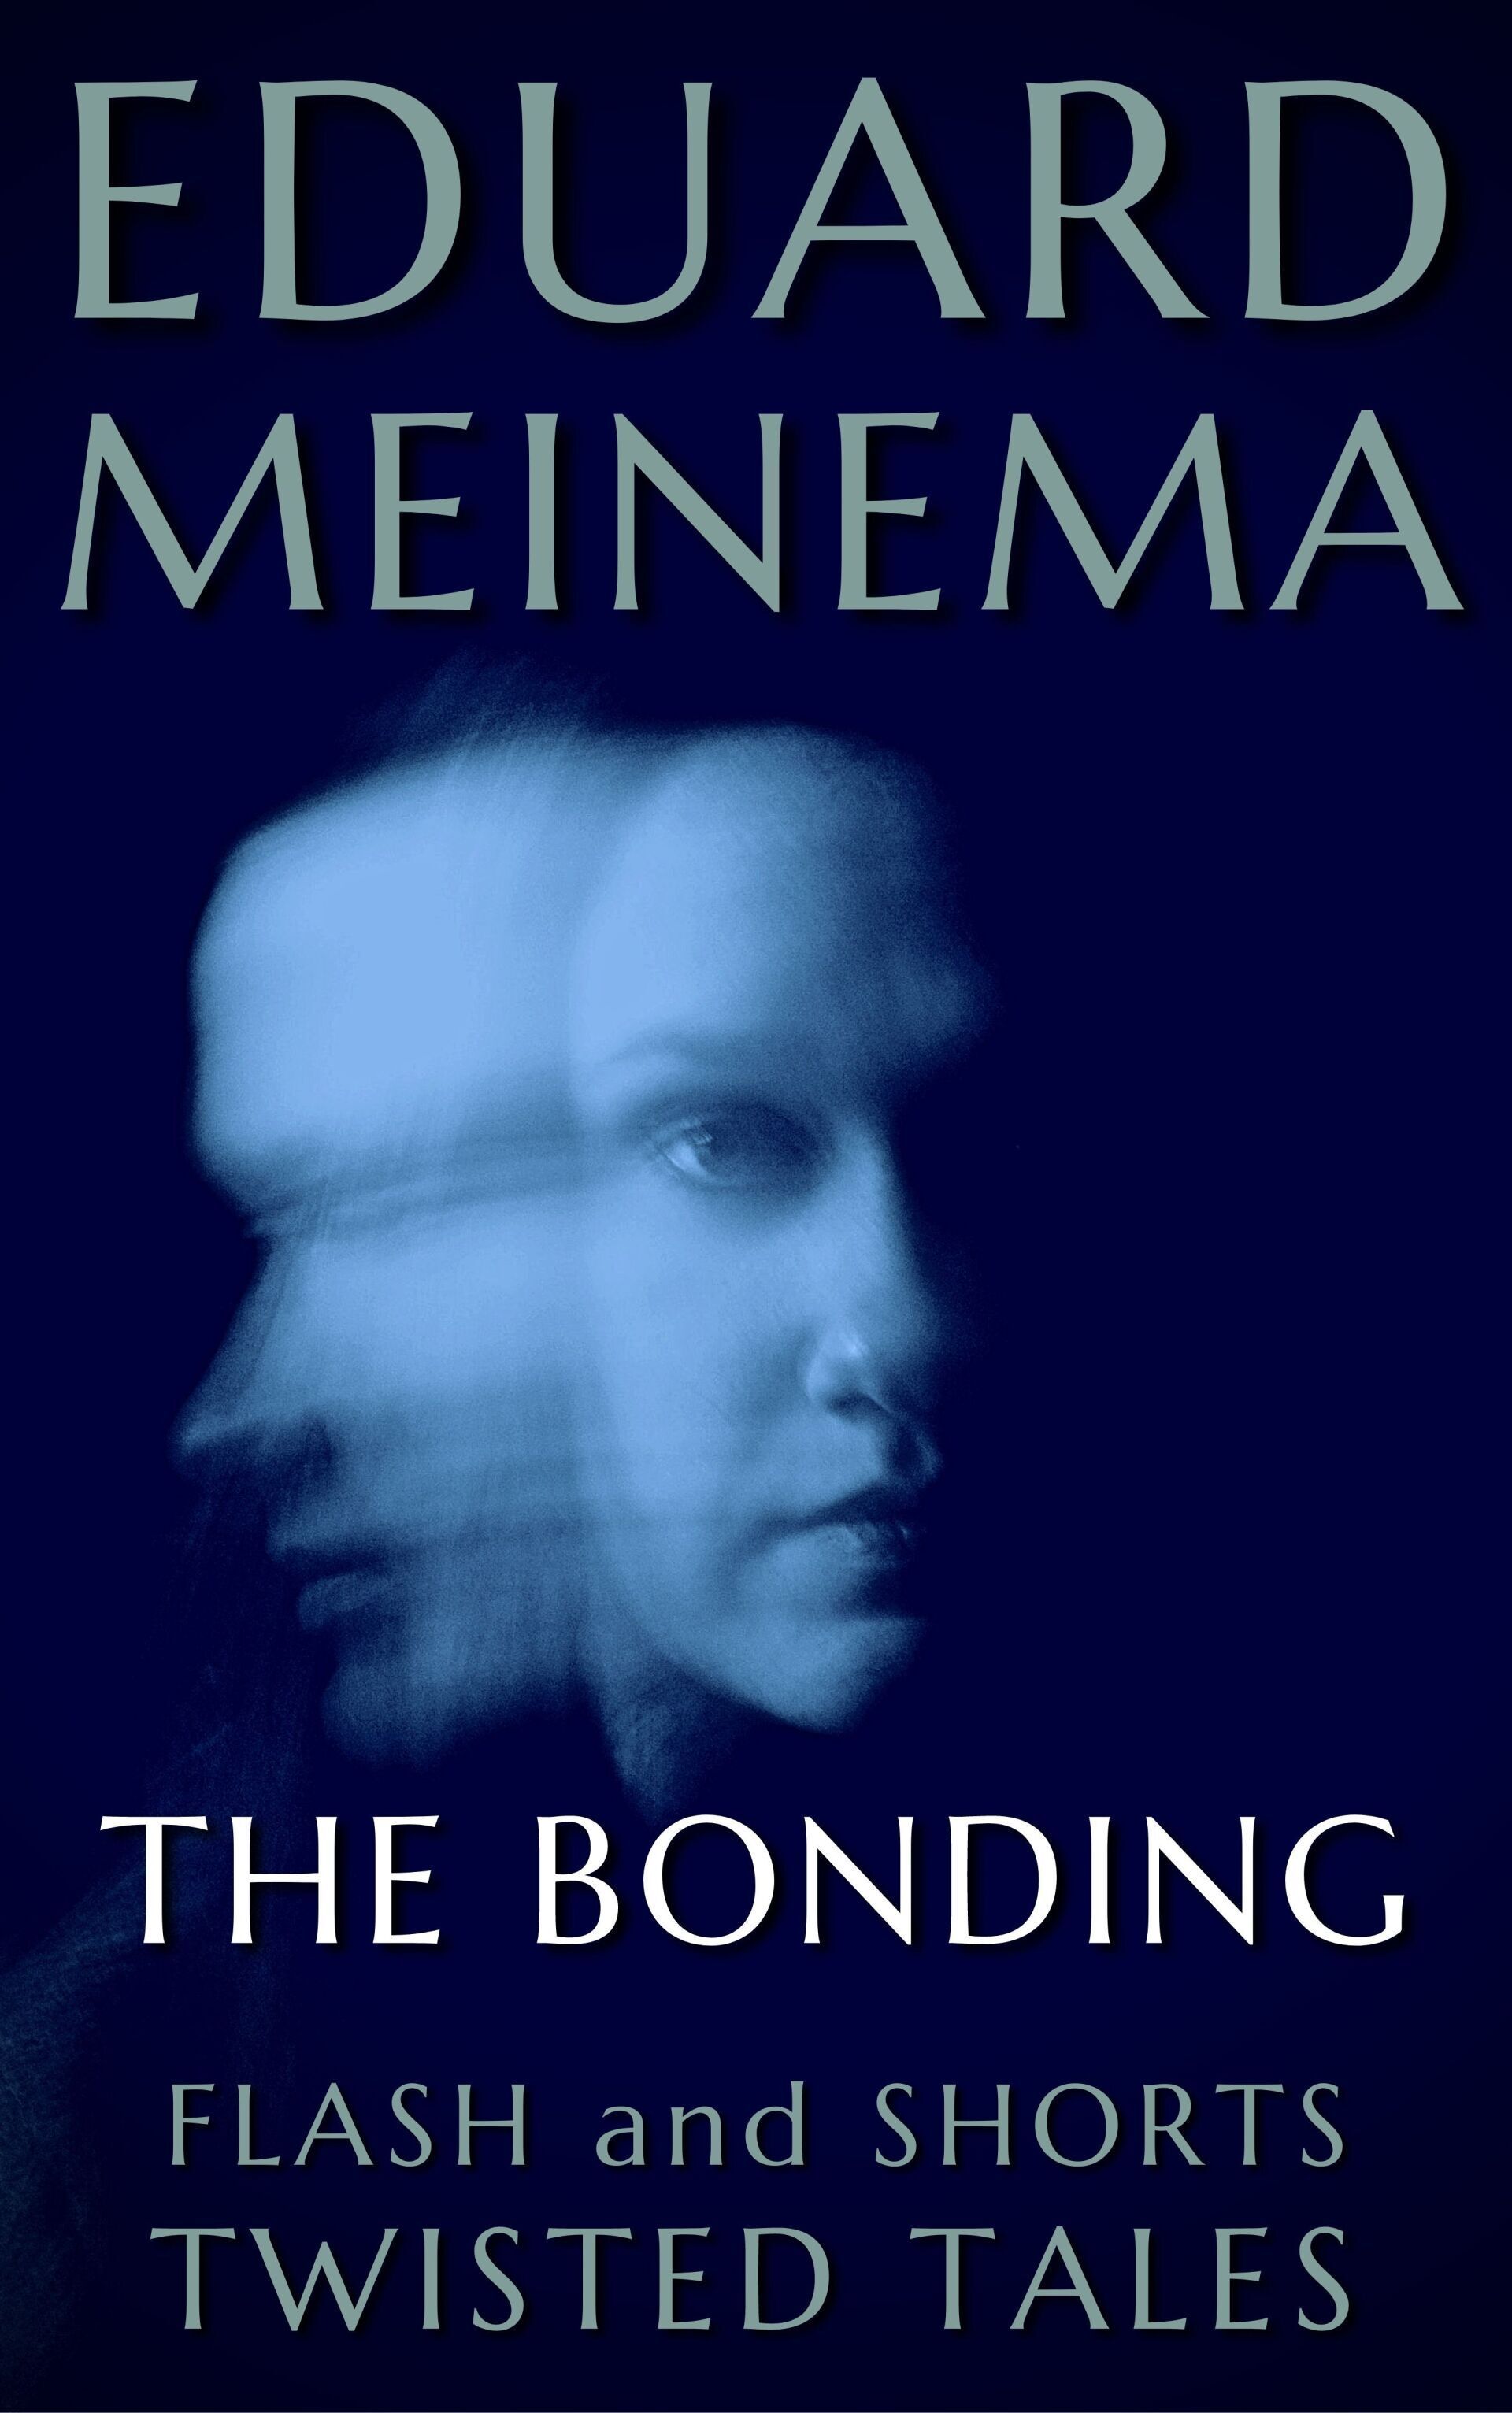 The Bonding, short story by Eduard Meinema.